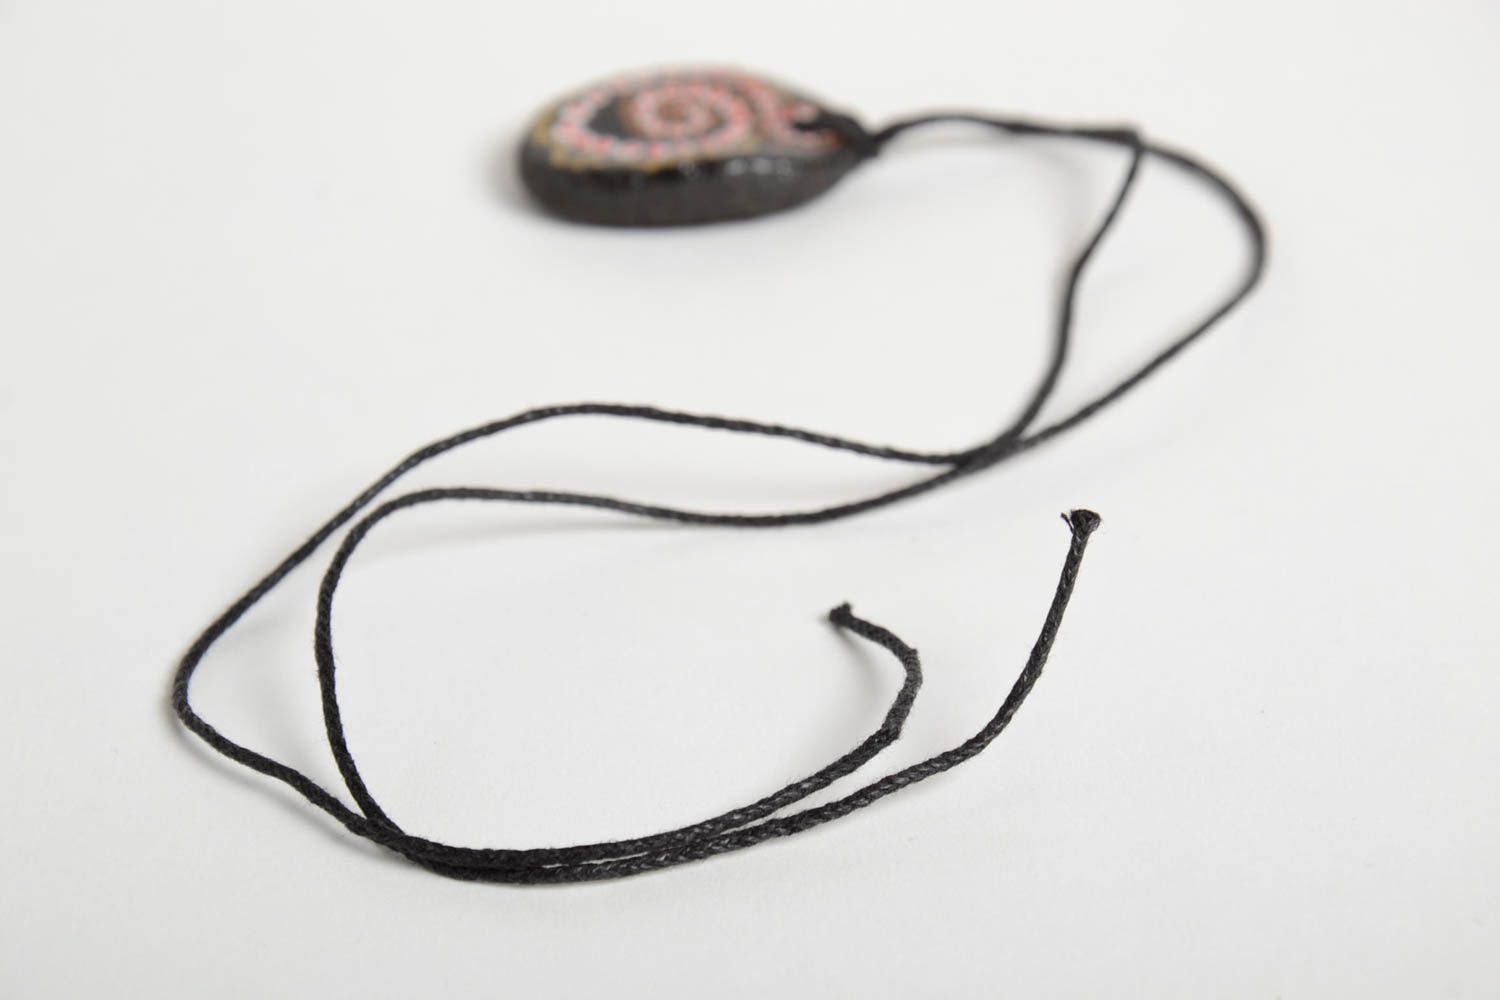 Handmade pendant designer pendant unusual accessory gift ideas gift fir girls photo 4